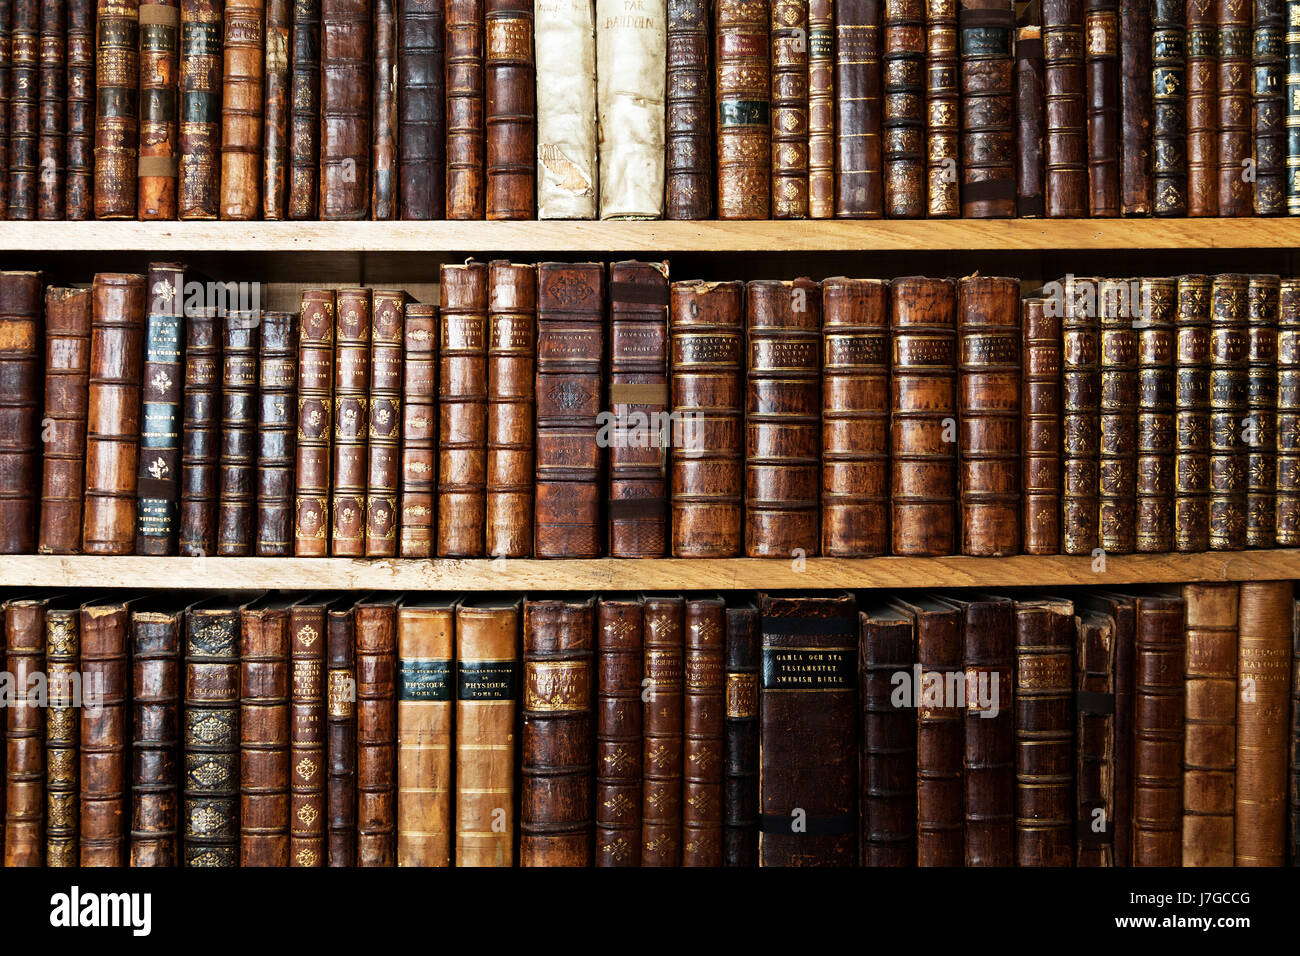 Old books in shelf, England, United Kingdom Stock Photo